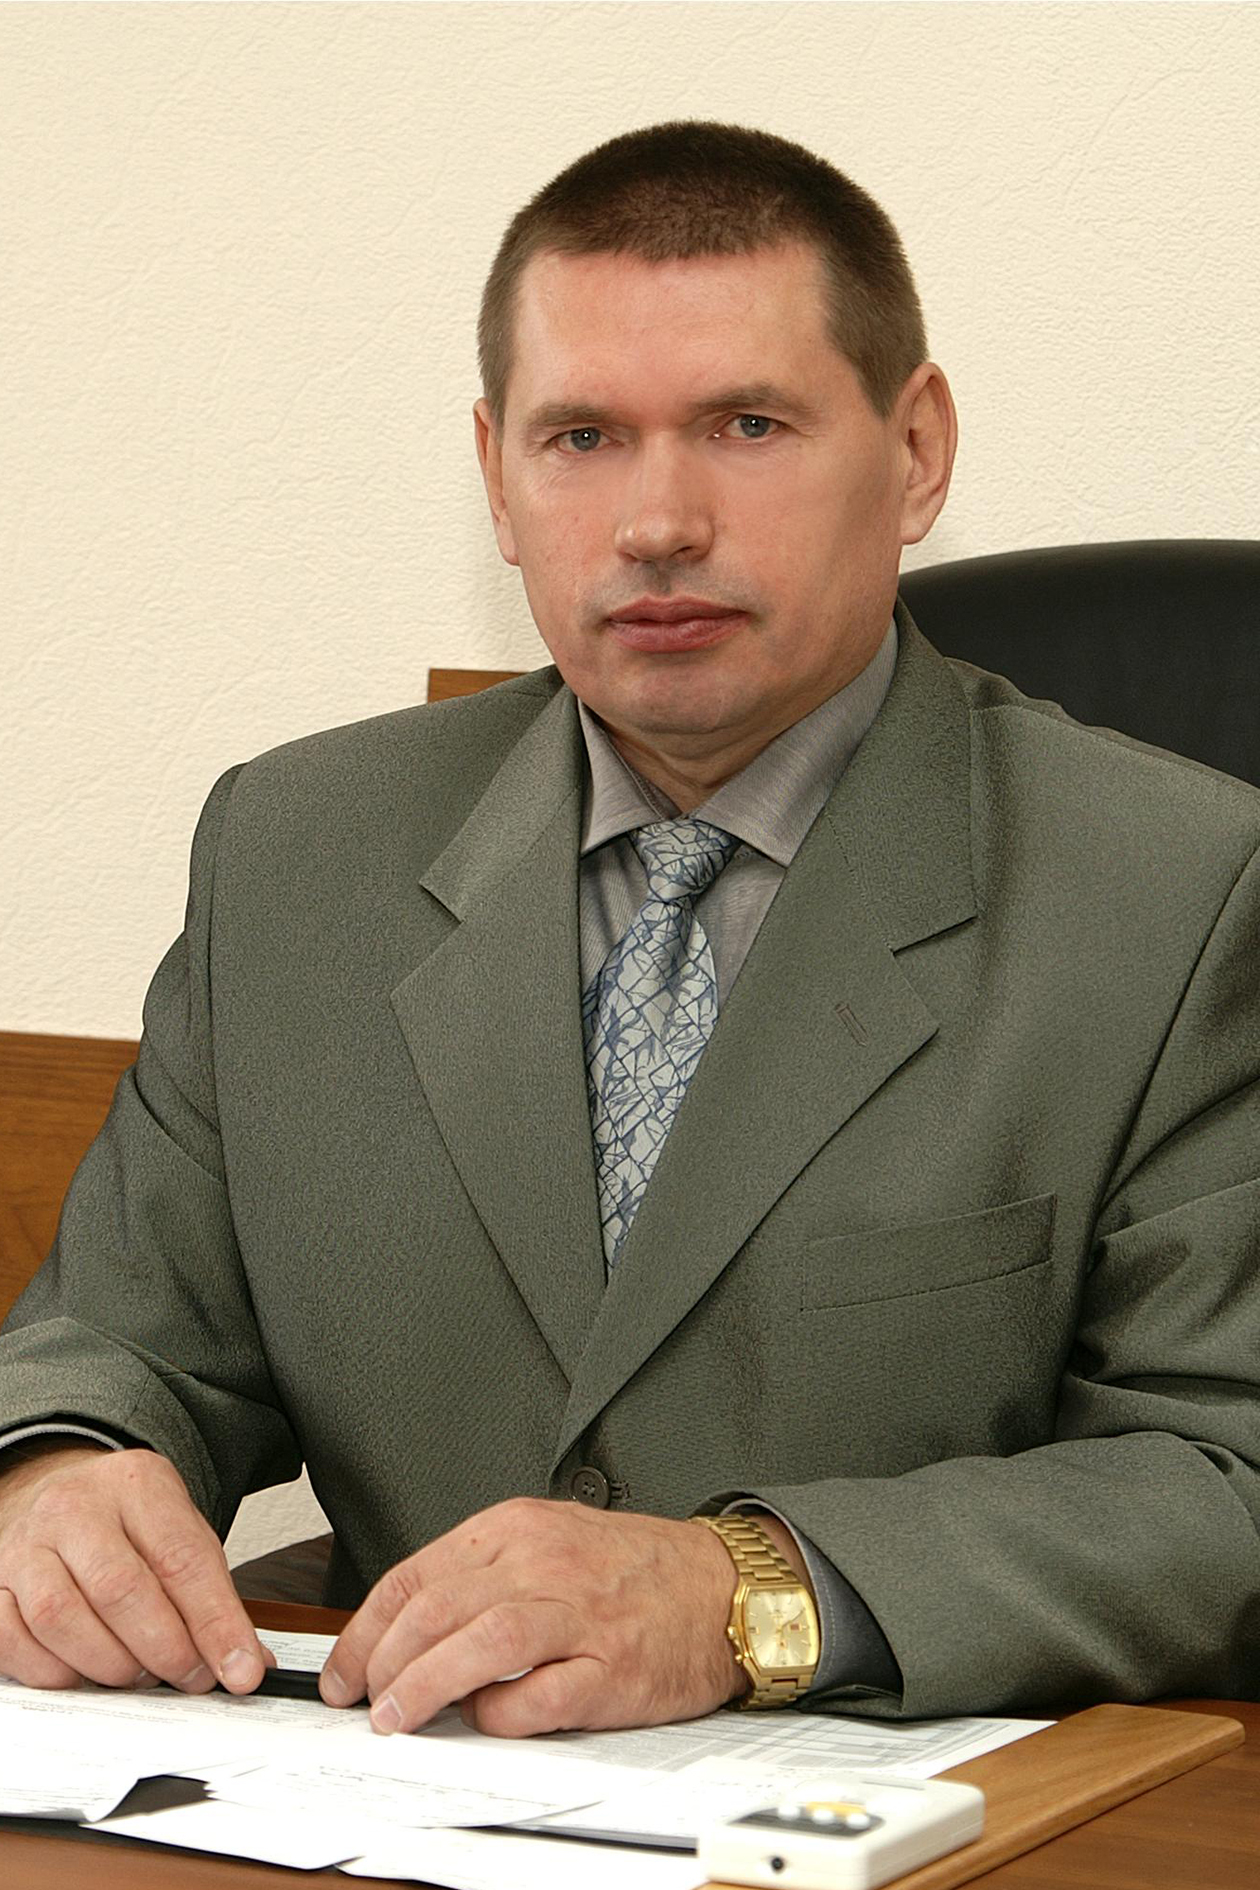                         Kovalenko Victor
            